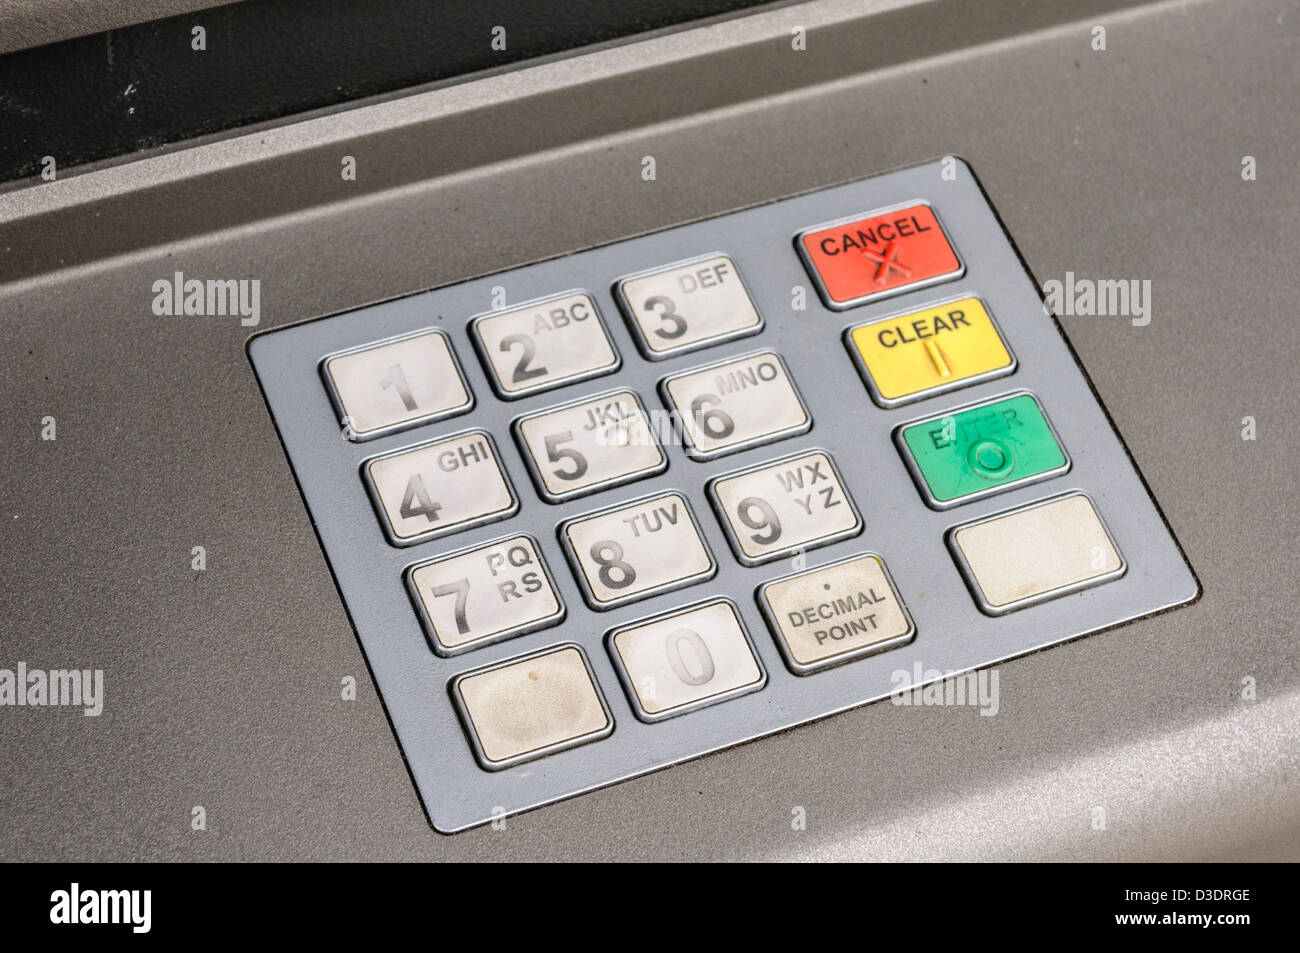 Keypad of an ATM cash machine Stock Photo